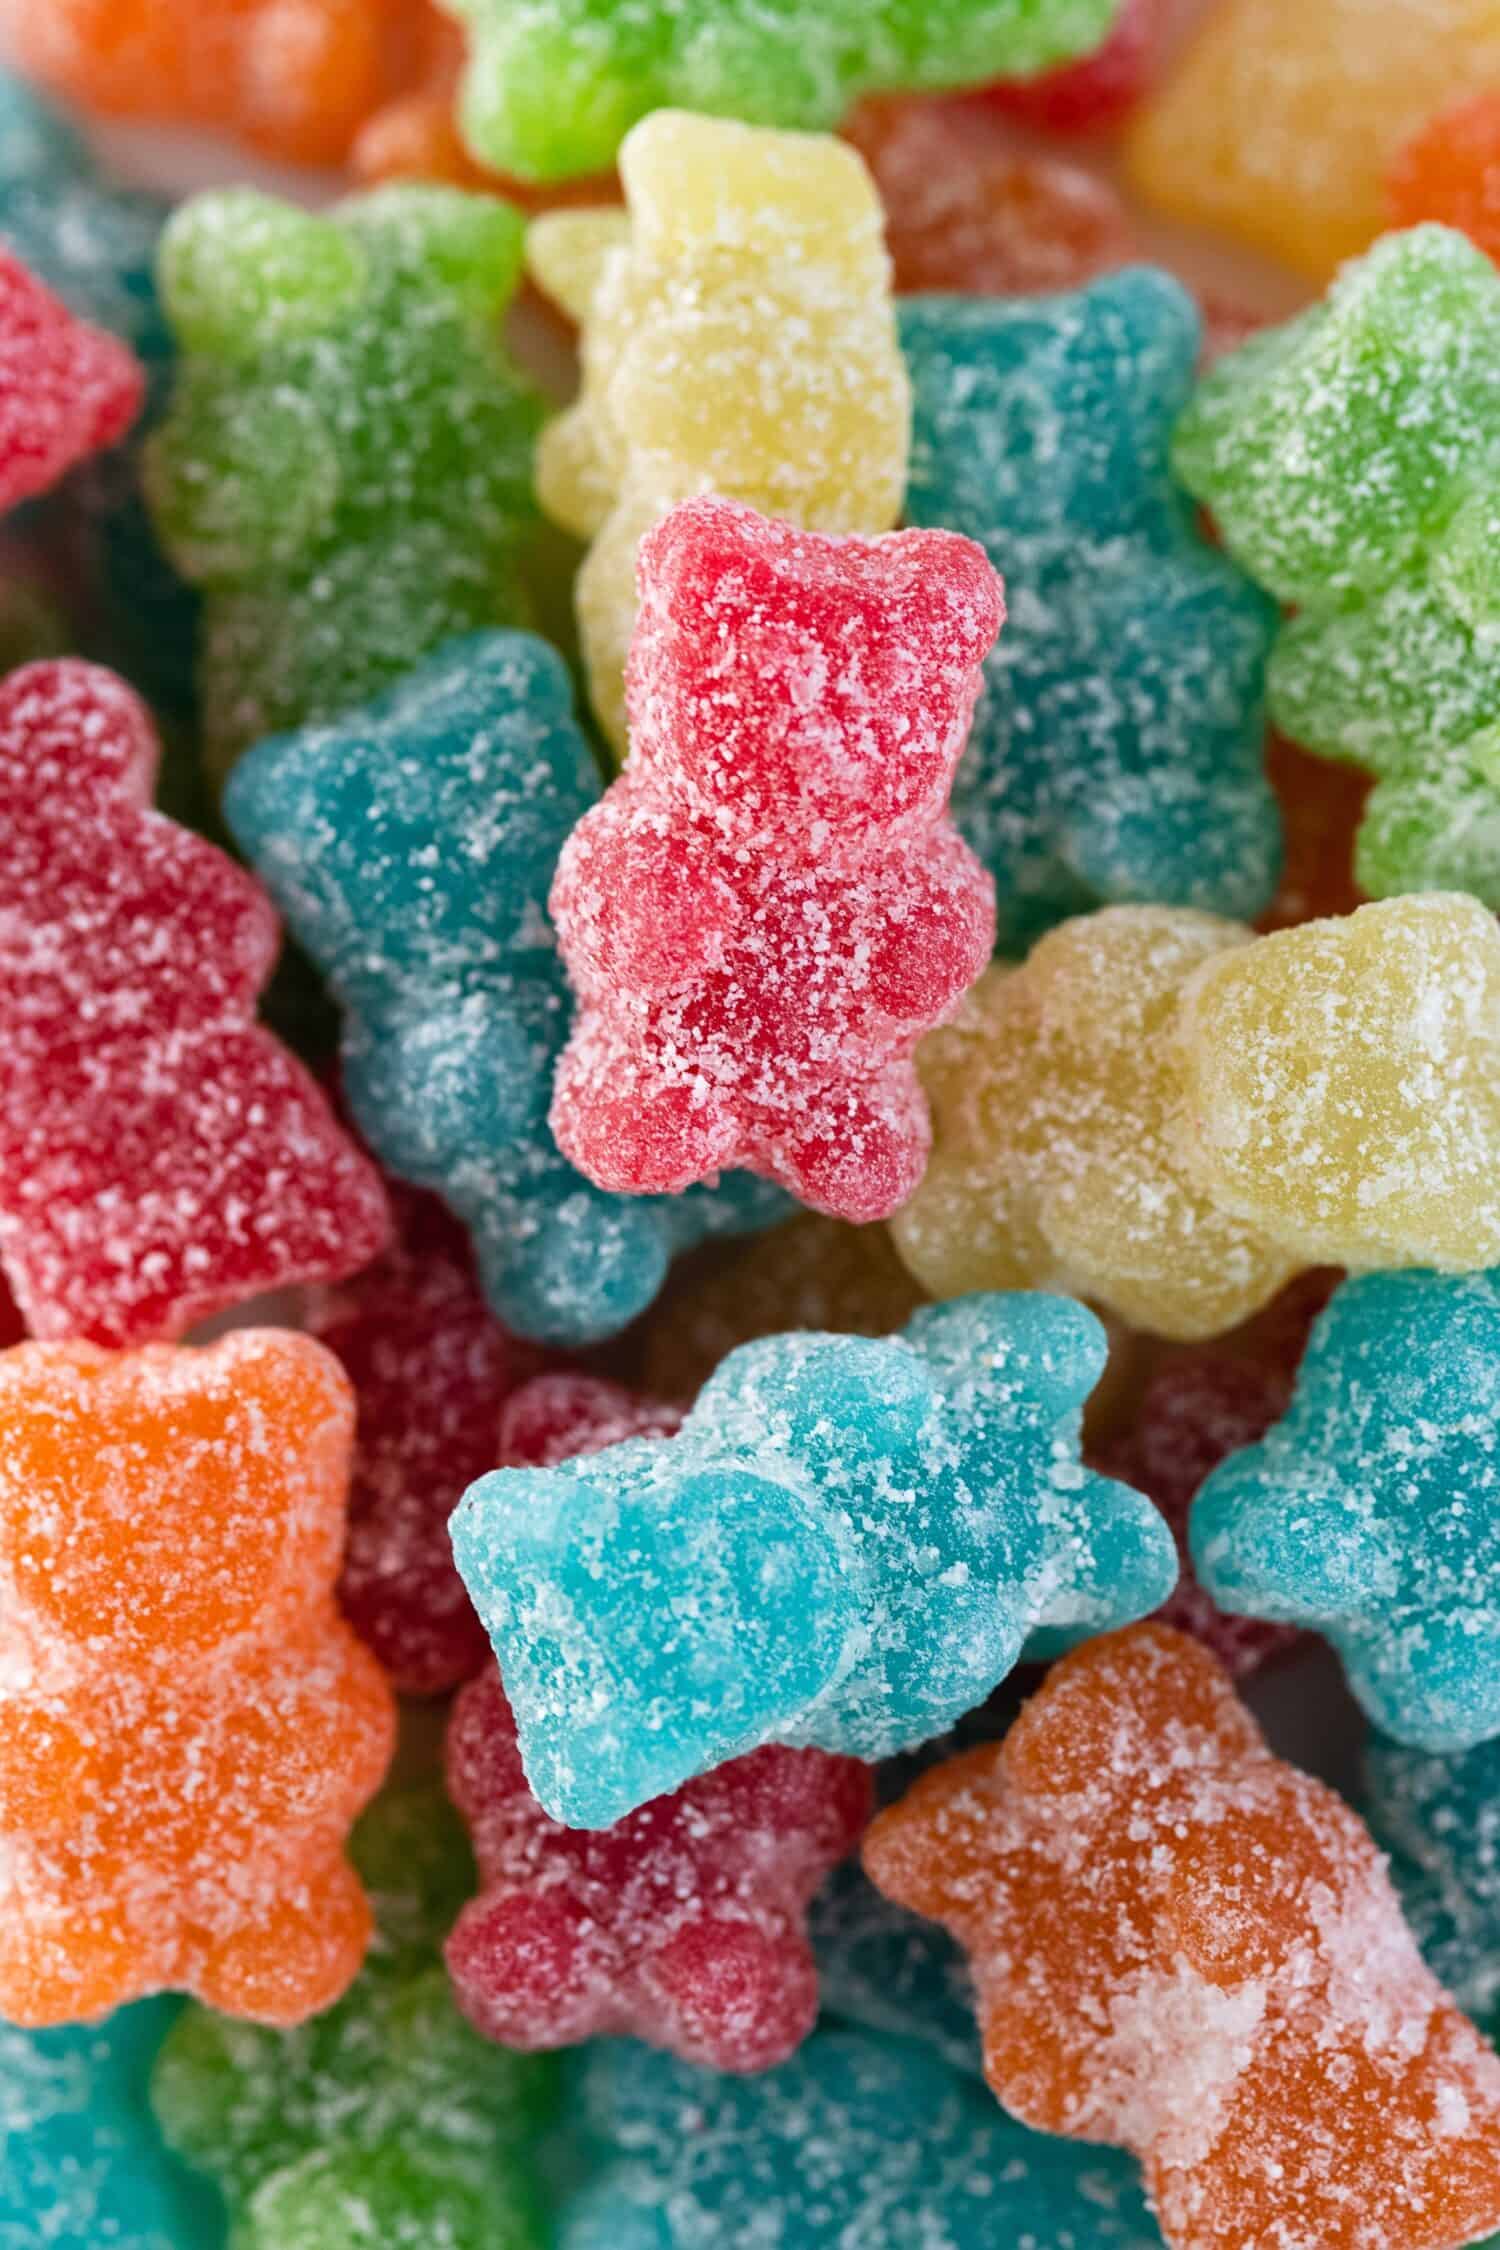 Is Brach's Sugar Free Gummy Bears Keto?